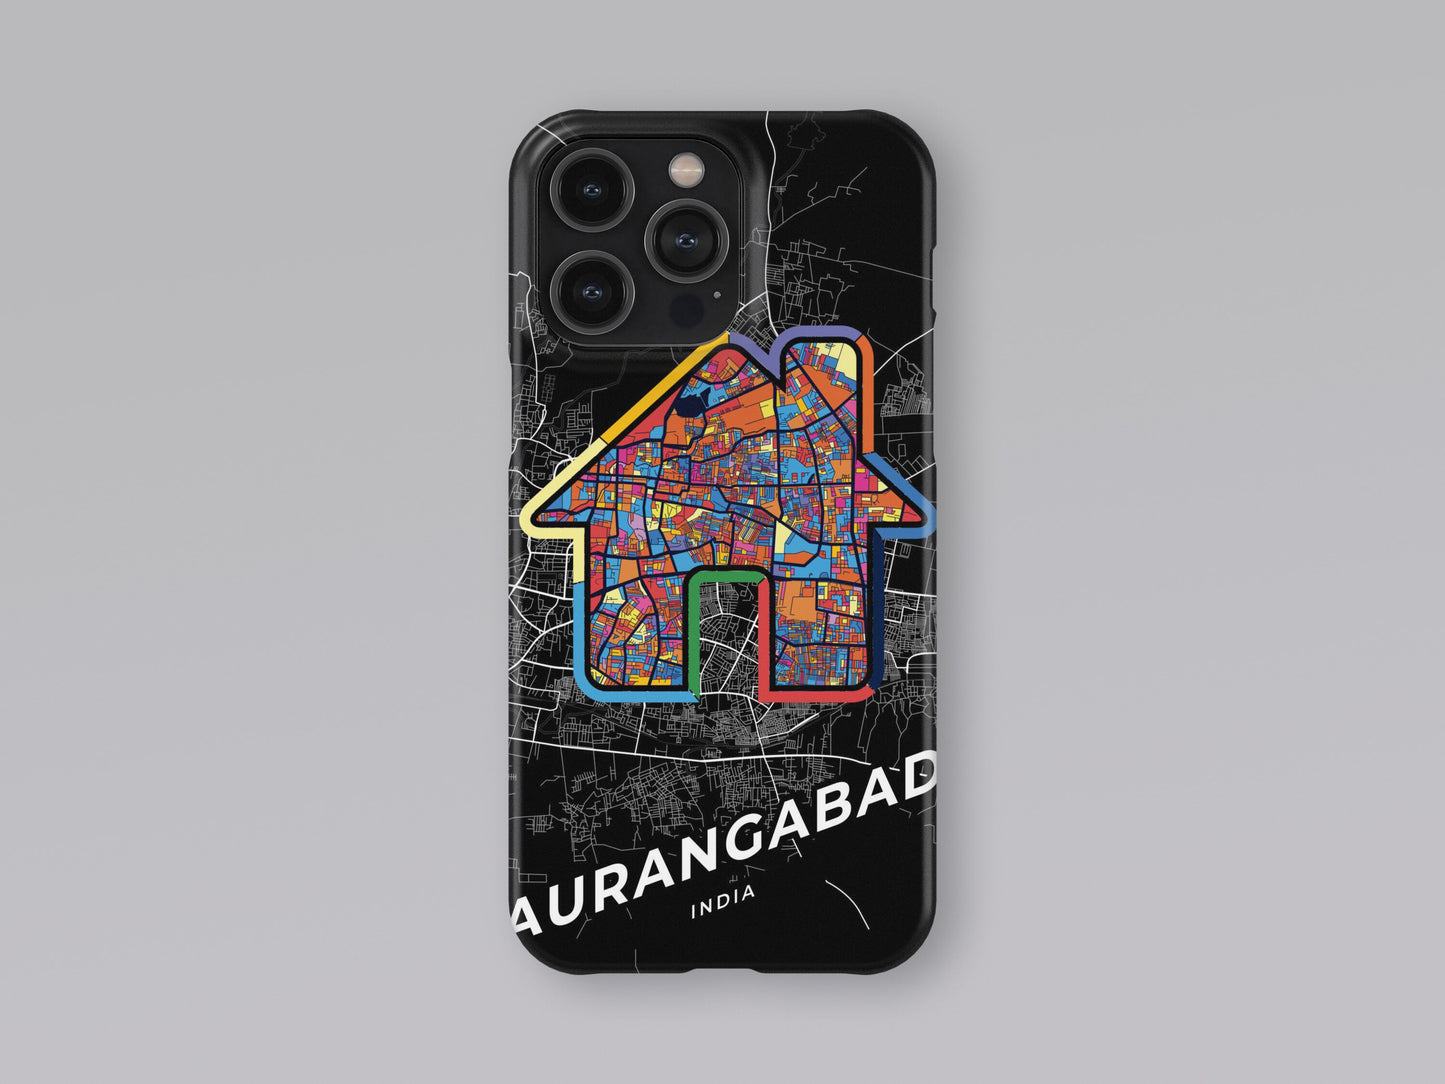 Aurangabad India slim phone case with colorful icon. Birthday, wedding or housewarming gift. Couple match cases. 3